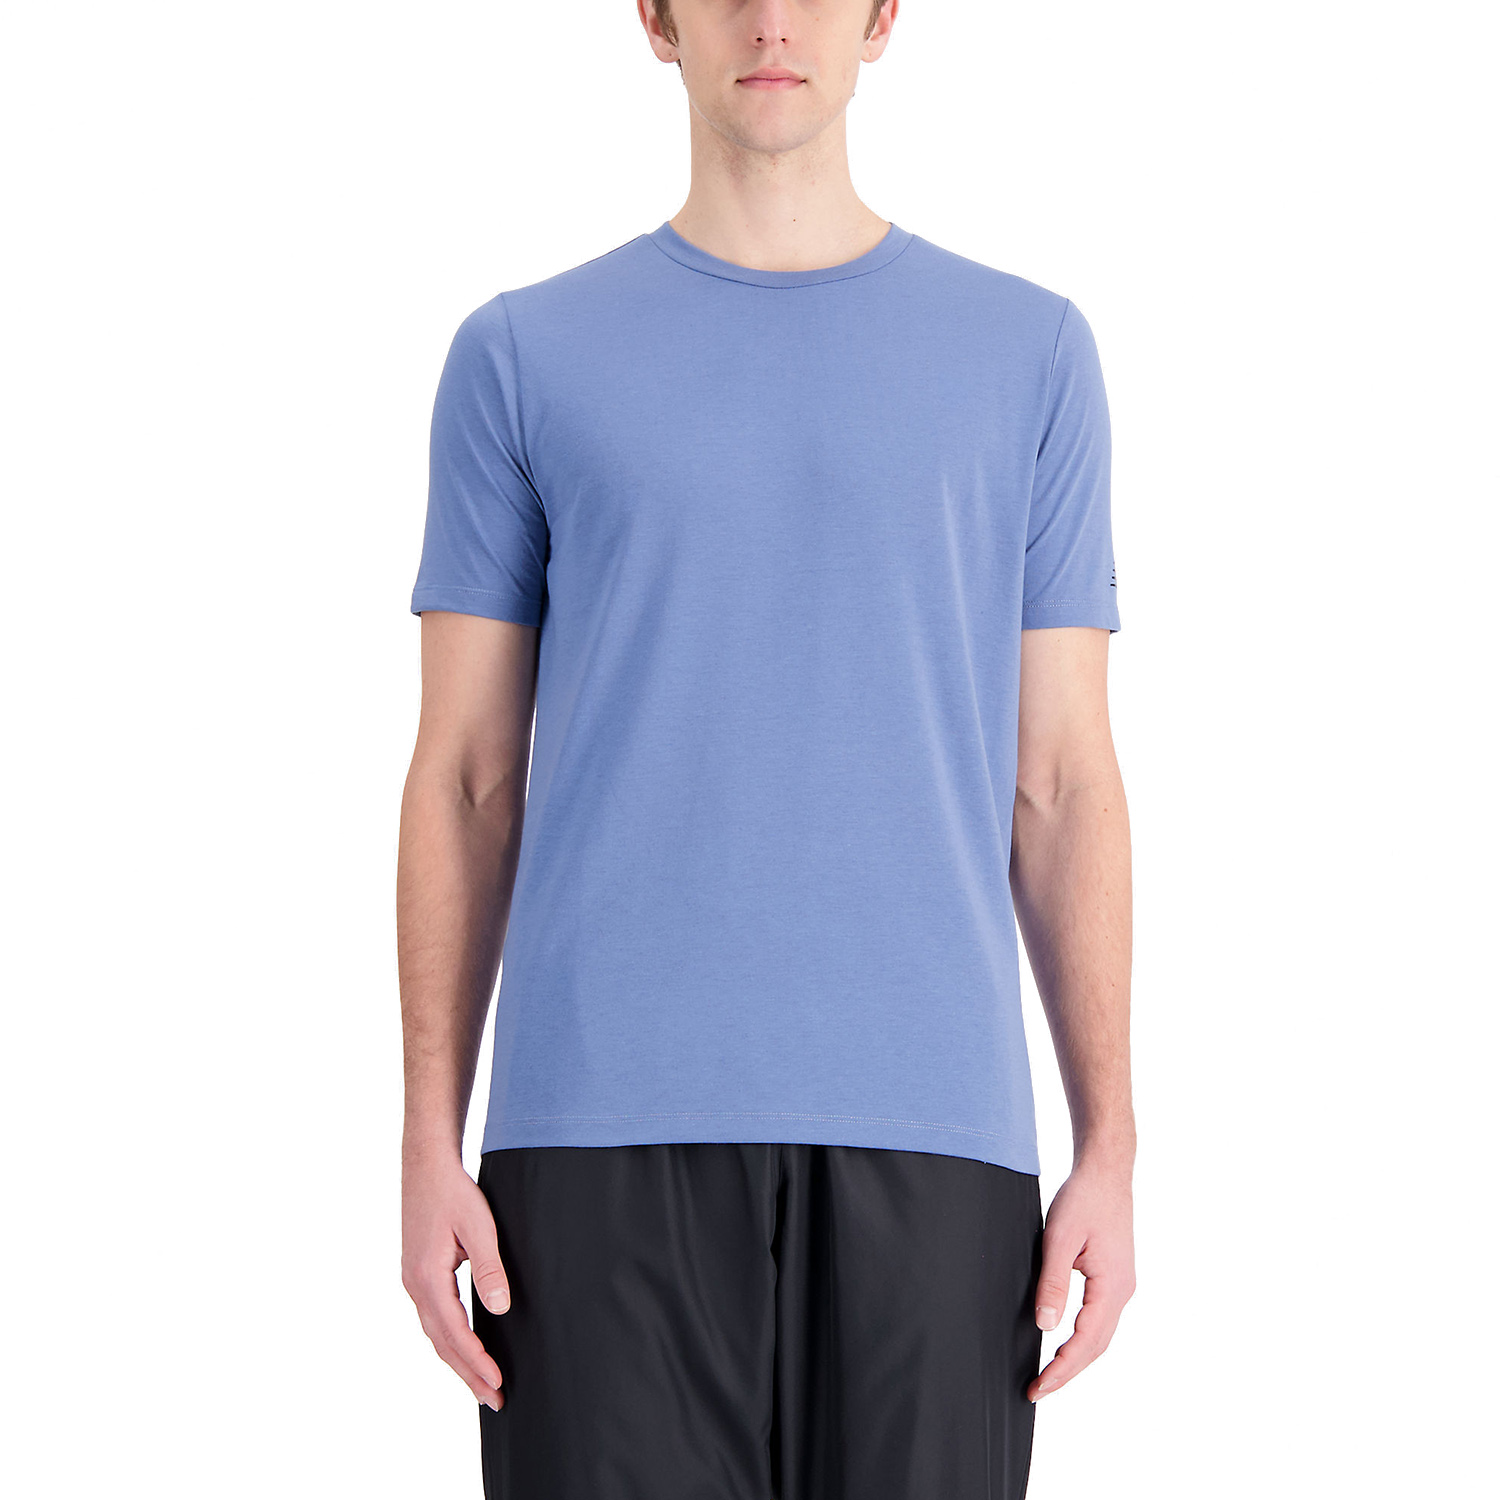 New Balance Tenacity Heathertech Graphic Camiseta - Mercury Blue